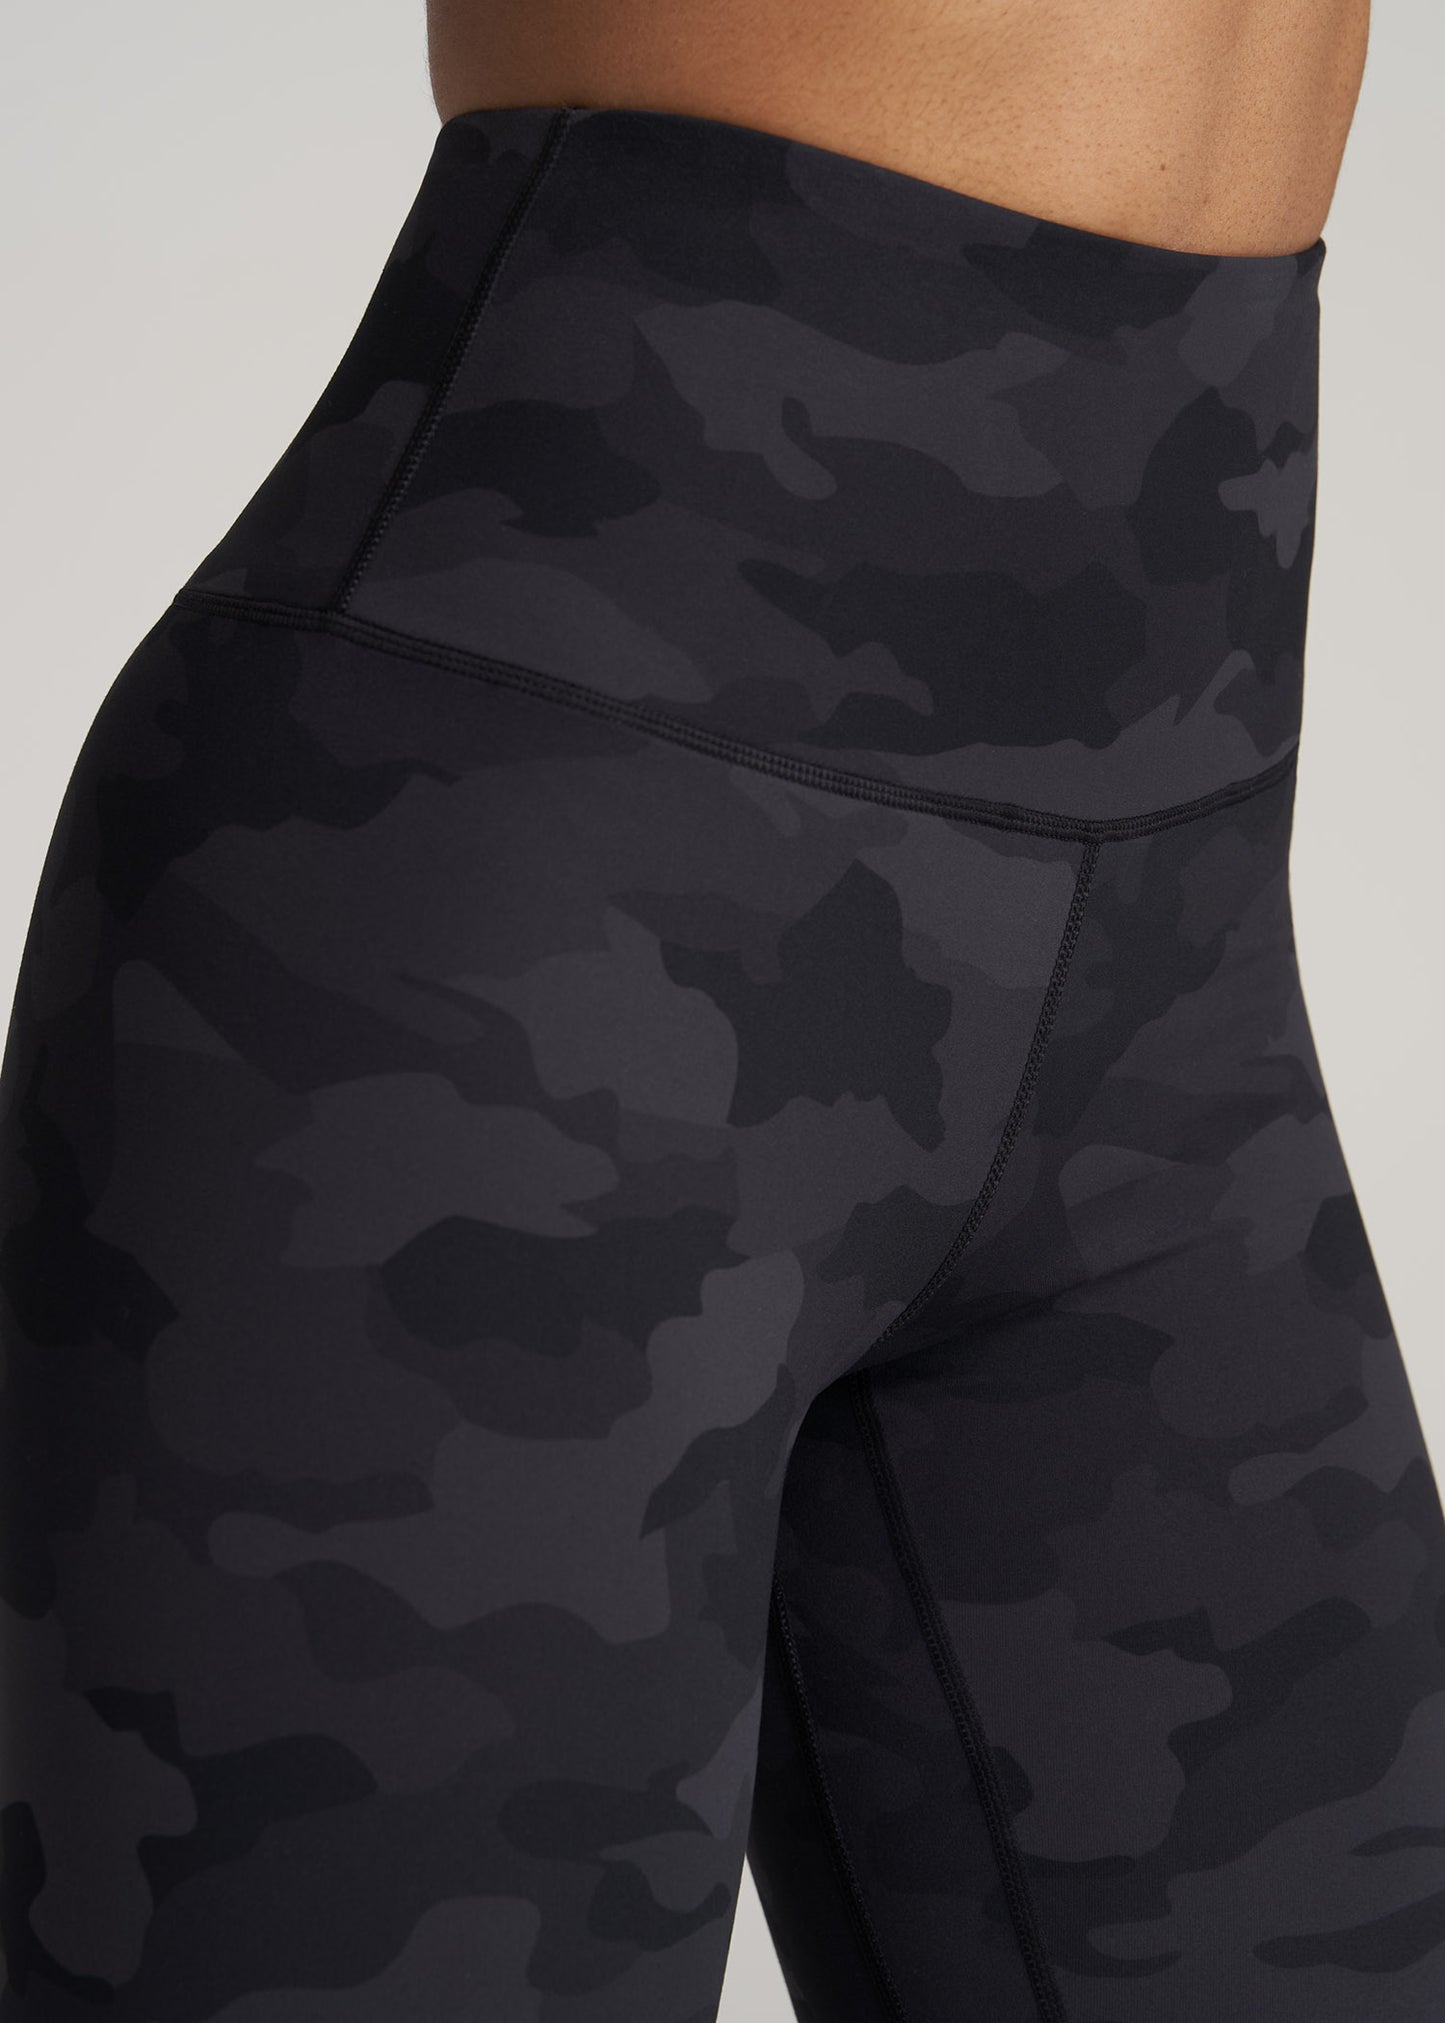 Womens Camouflage Leggings - Snug Cotton Spandex Classic Camo